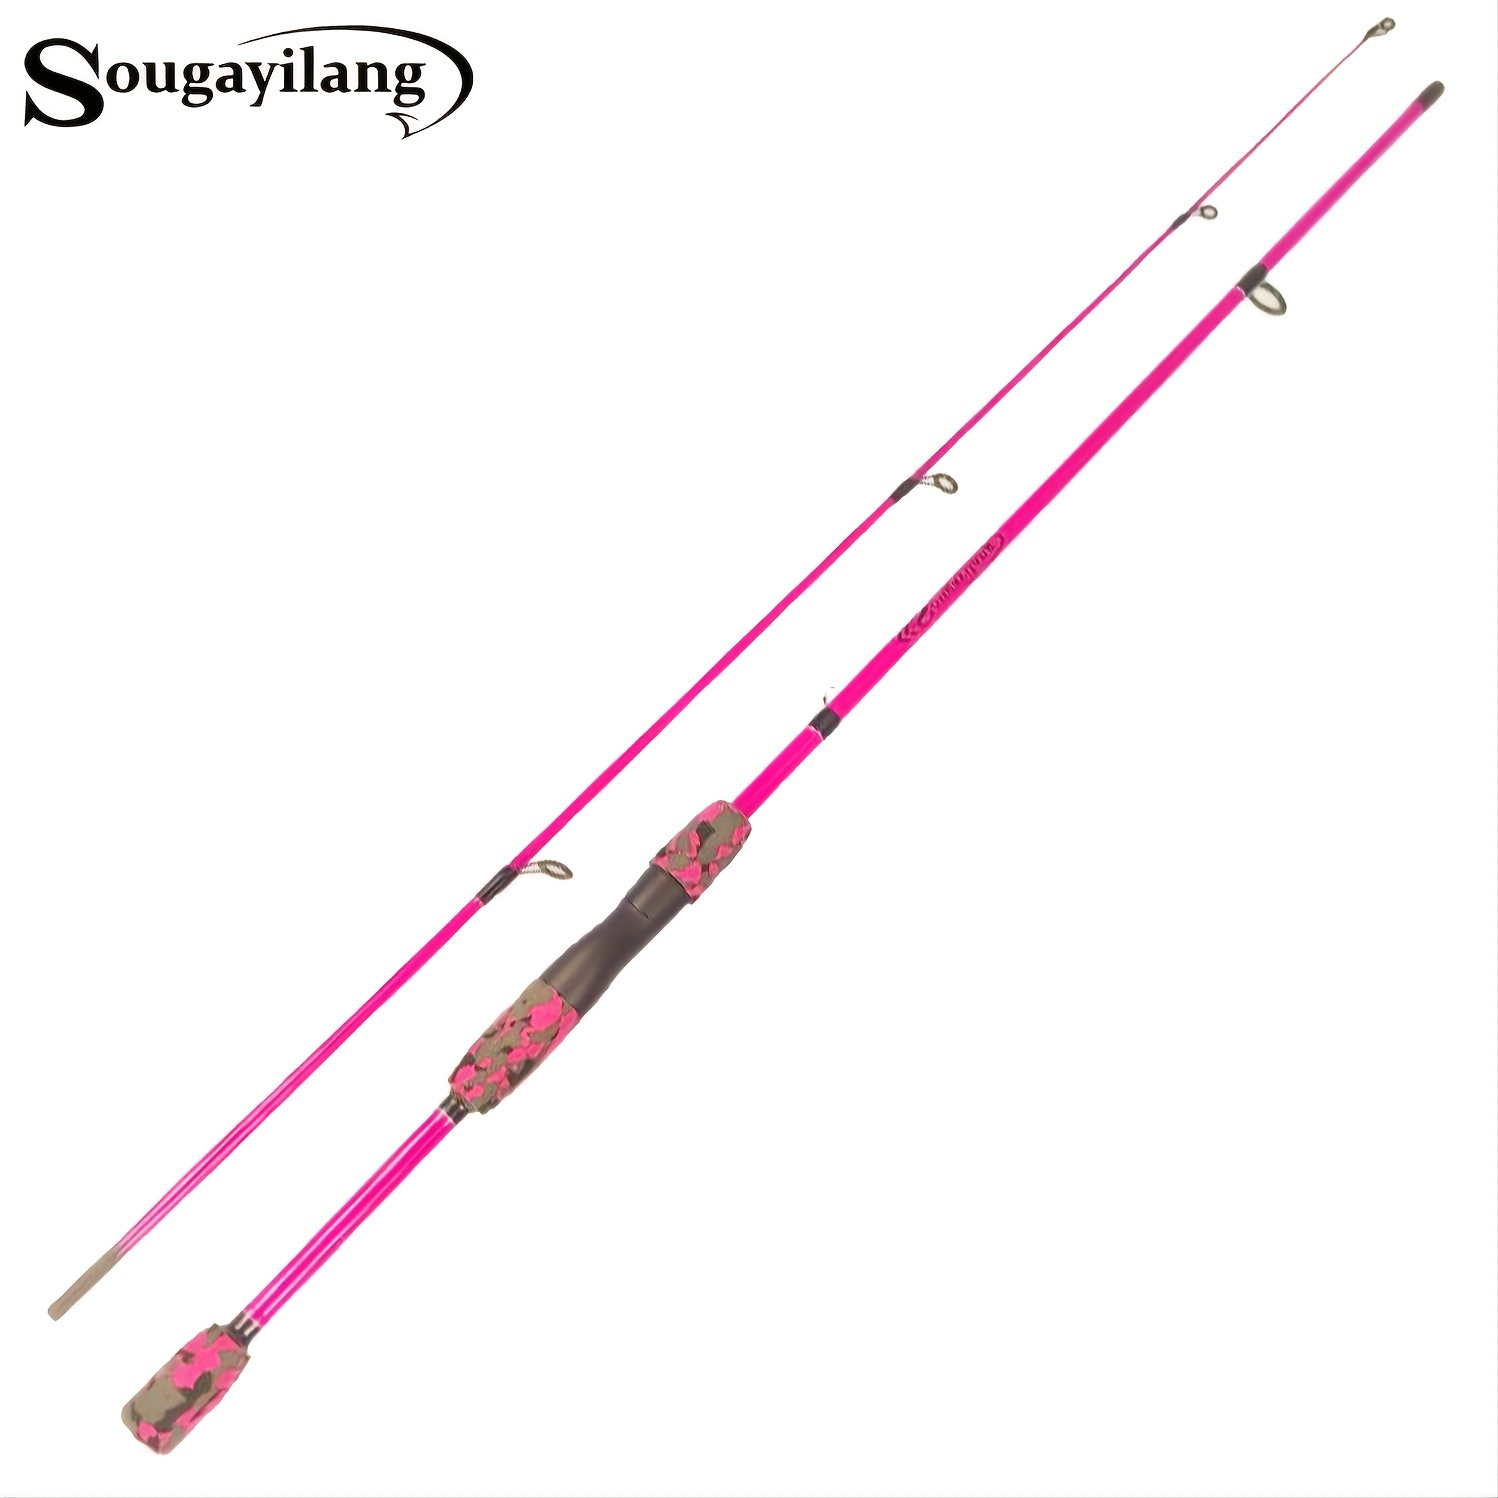 Sougayilang 1.8M Carbon Fiber Spinning Fishing Rod - Lightweight, Durable,  And Sensitive